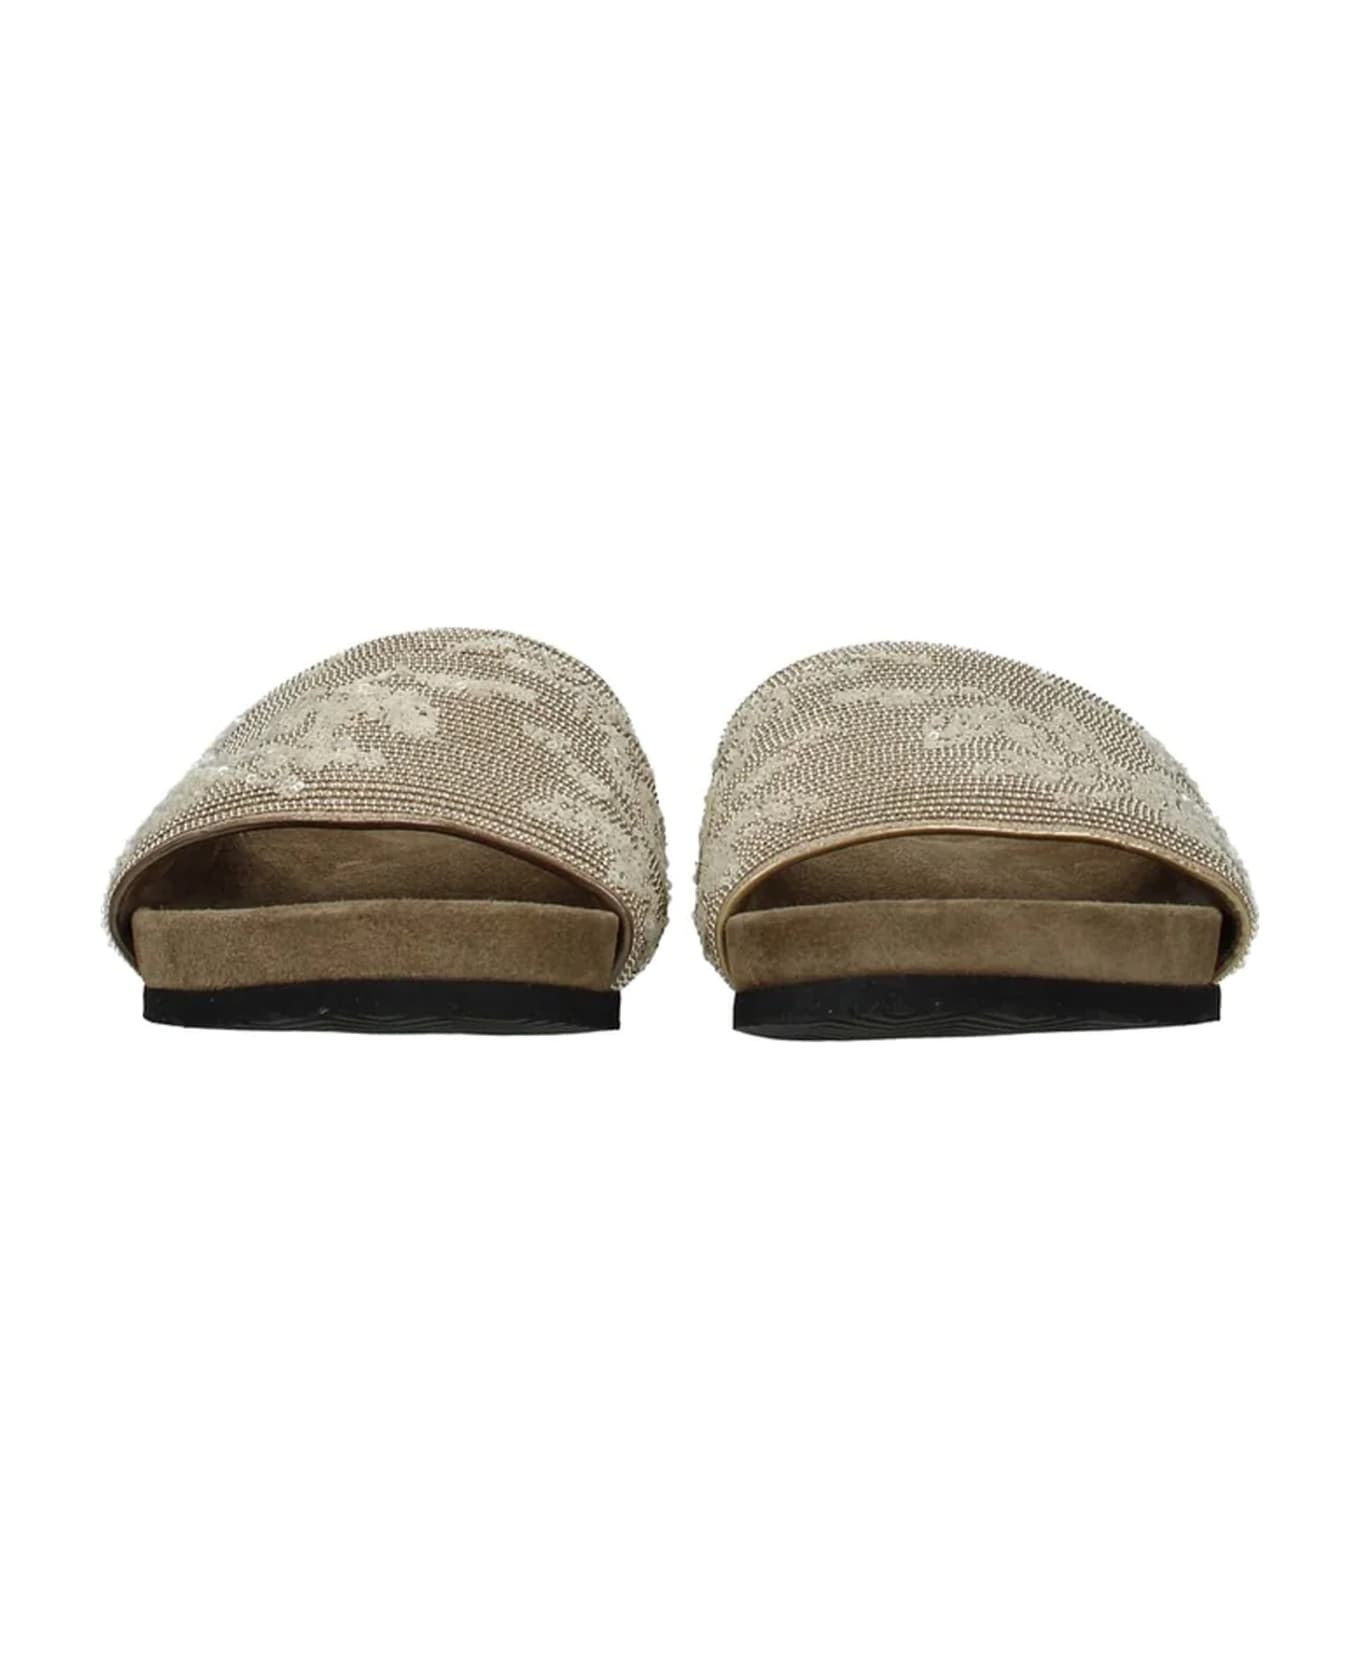 Brunello Cucinelli Leather Flats - Beige サンダル